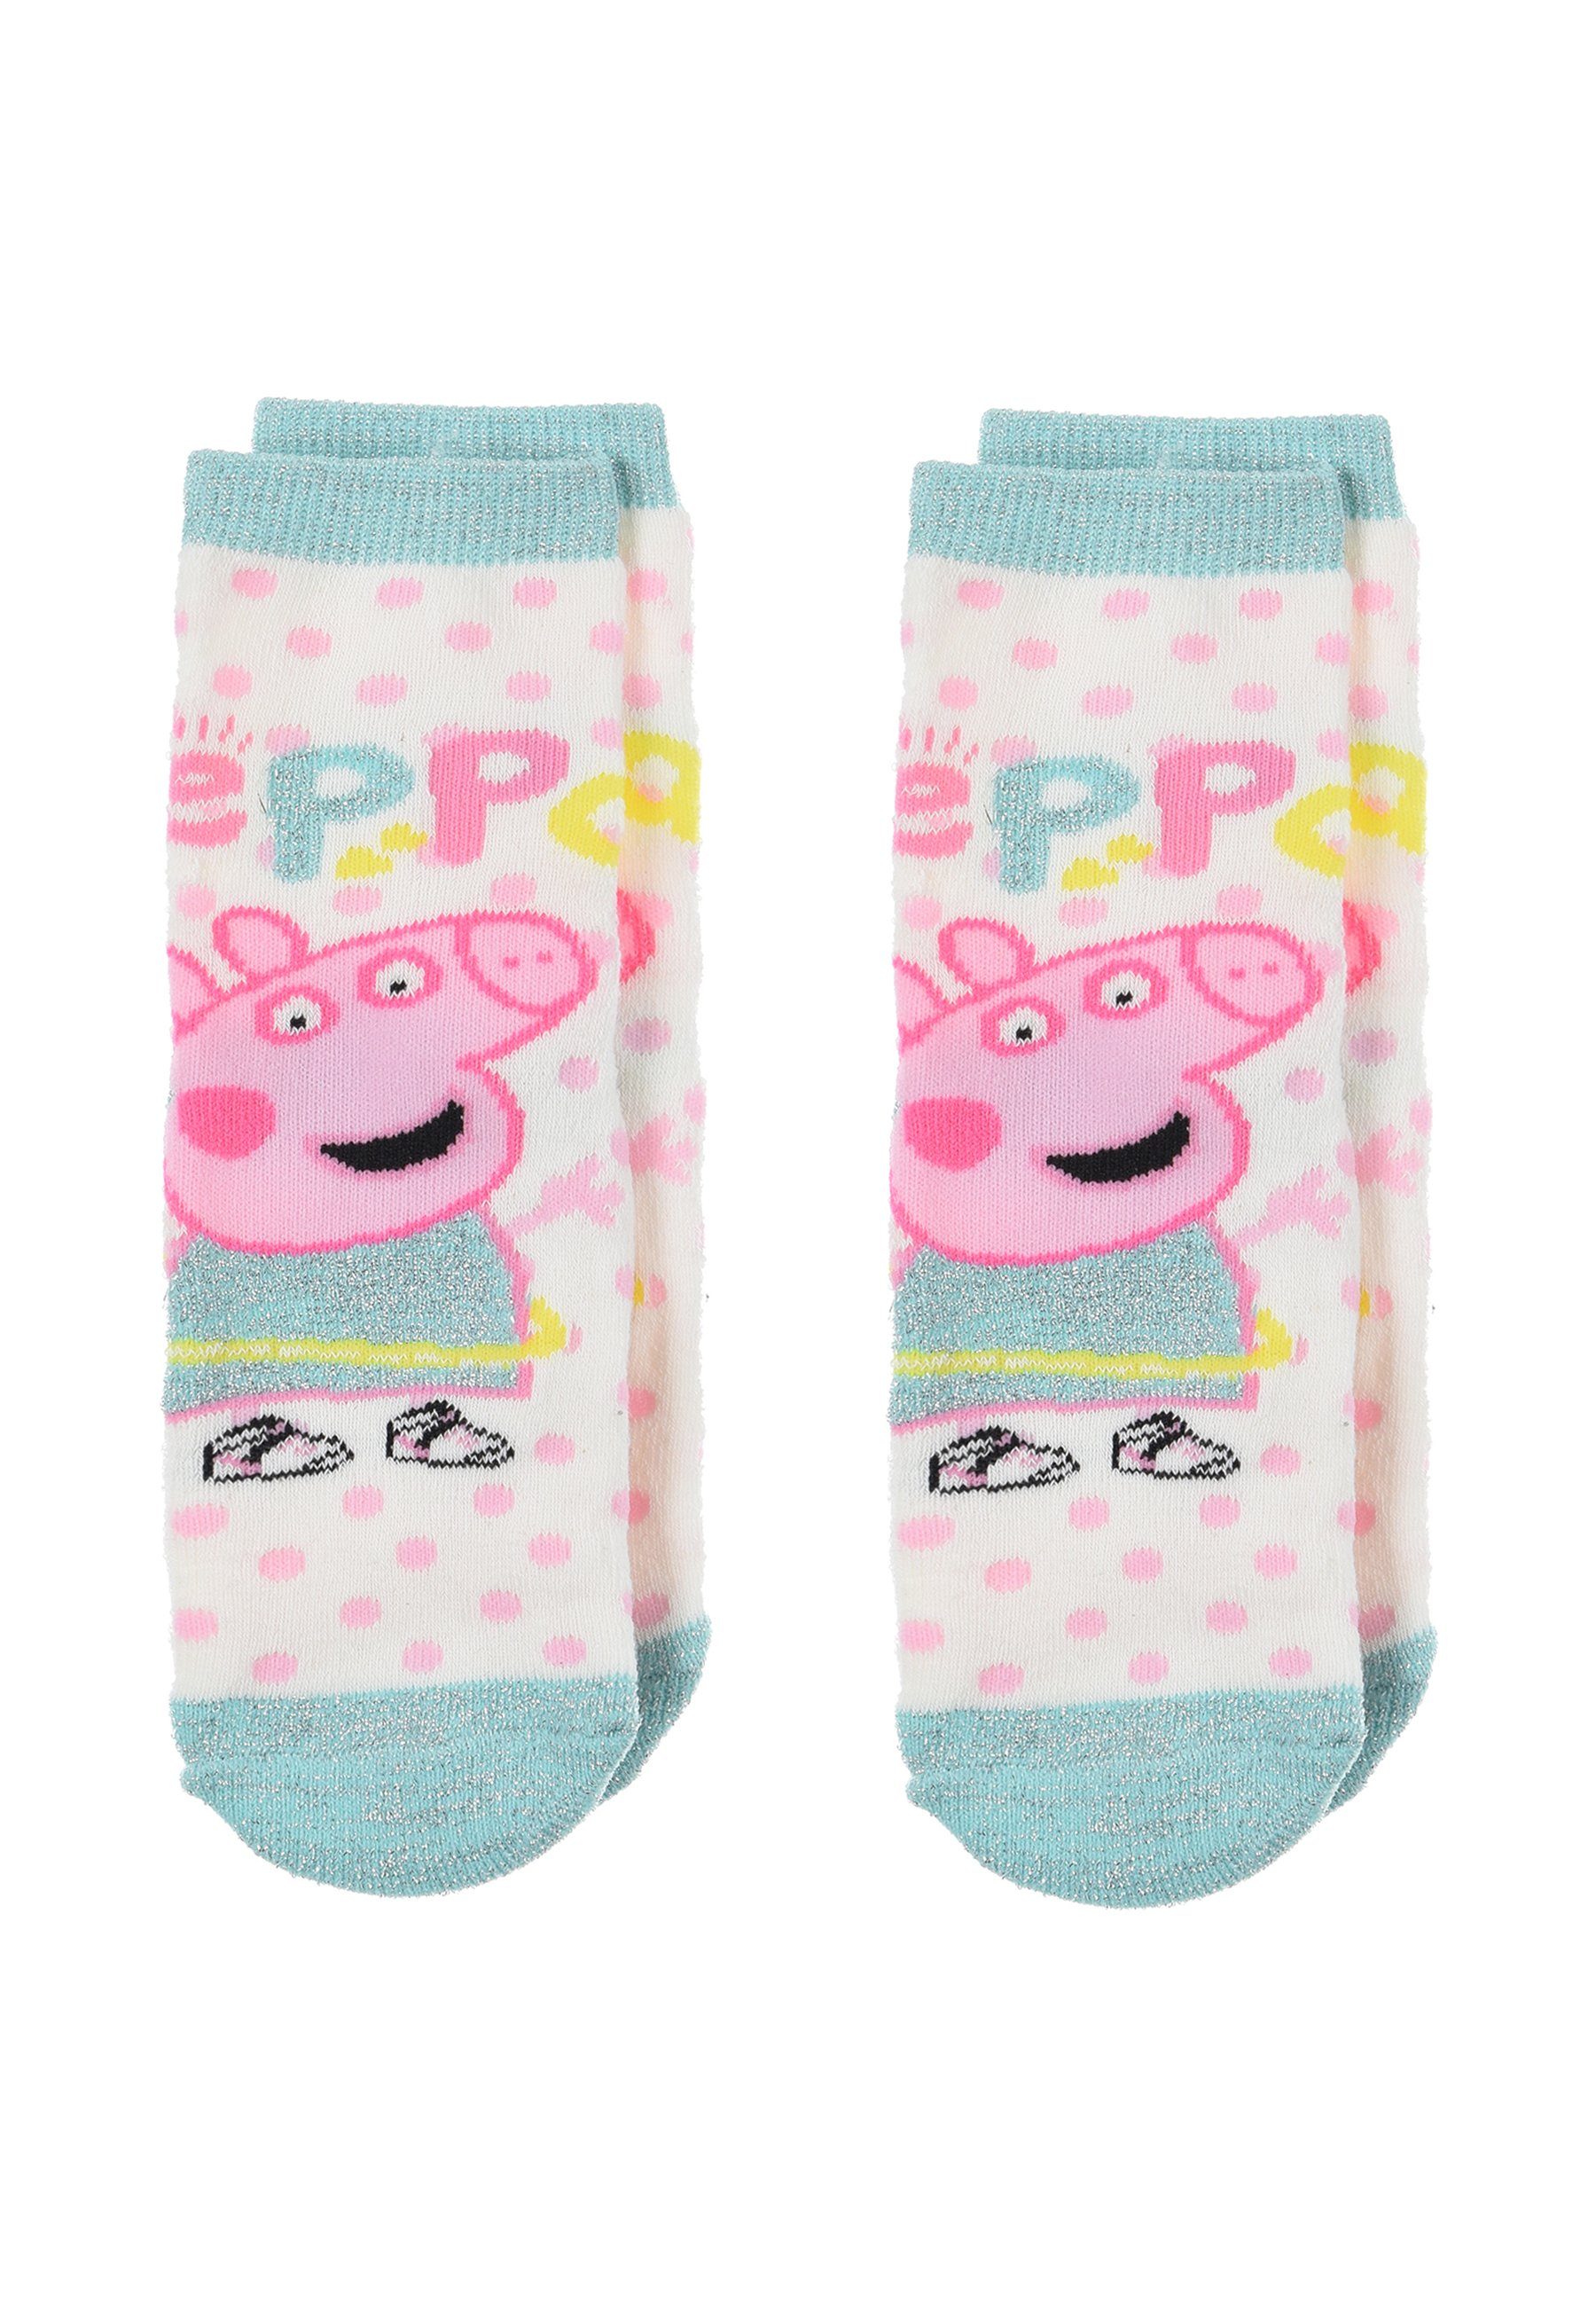 Peppa Pig ABS-Socken Peppa Wutz Mädchen Strümpfe Socken (2-Paar) mit anti-rutsch Noppen | Stoppersocken